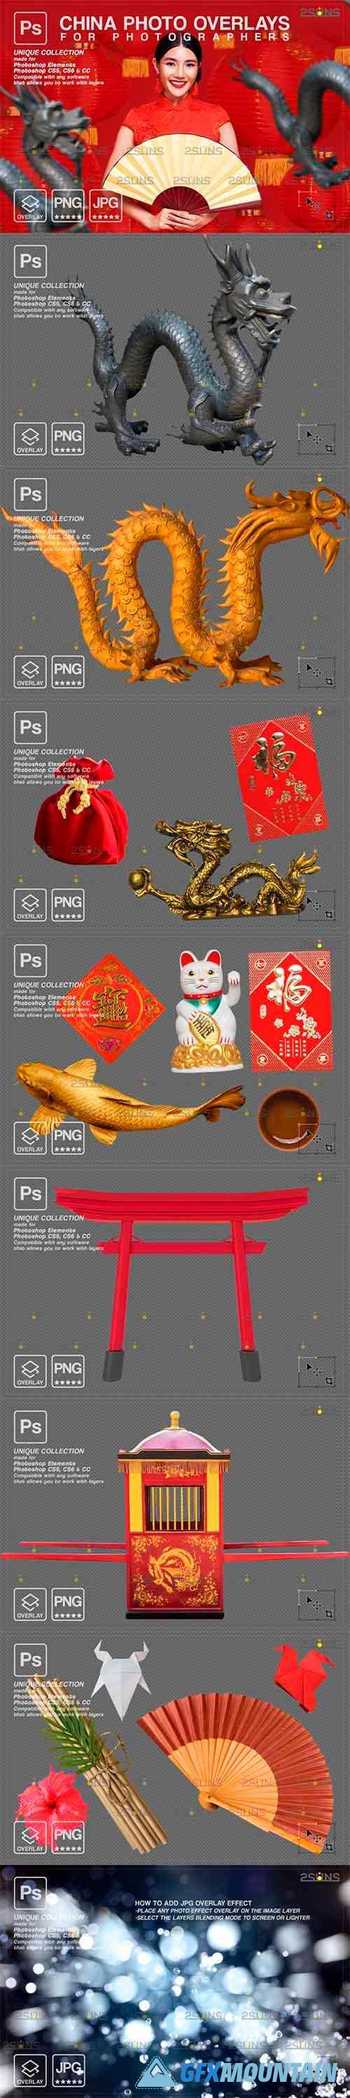 Lunar New Year photo overlay China png V1